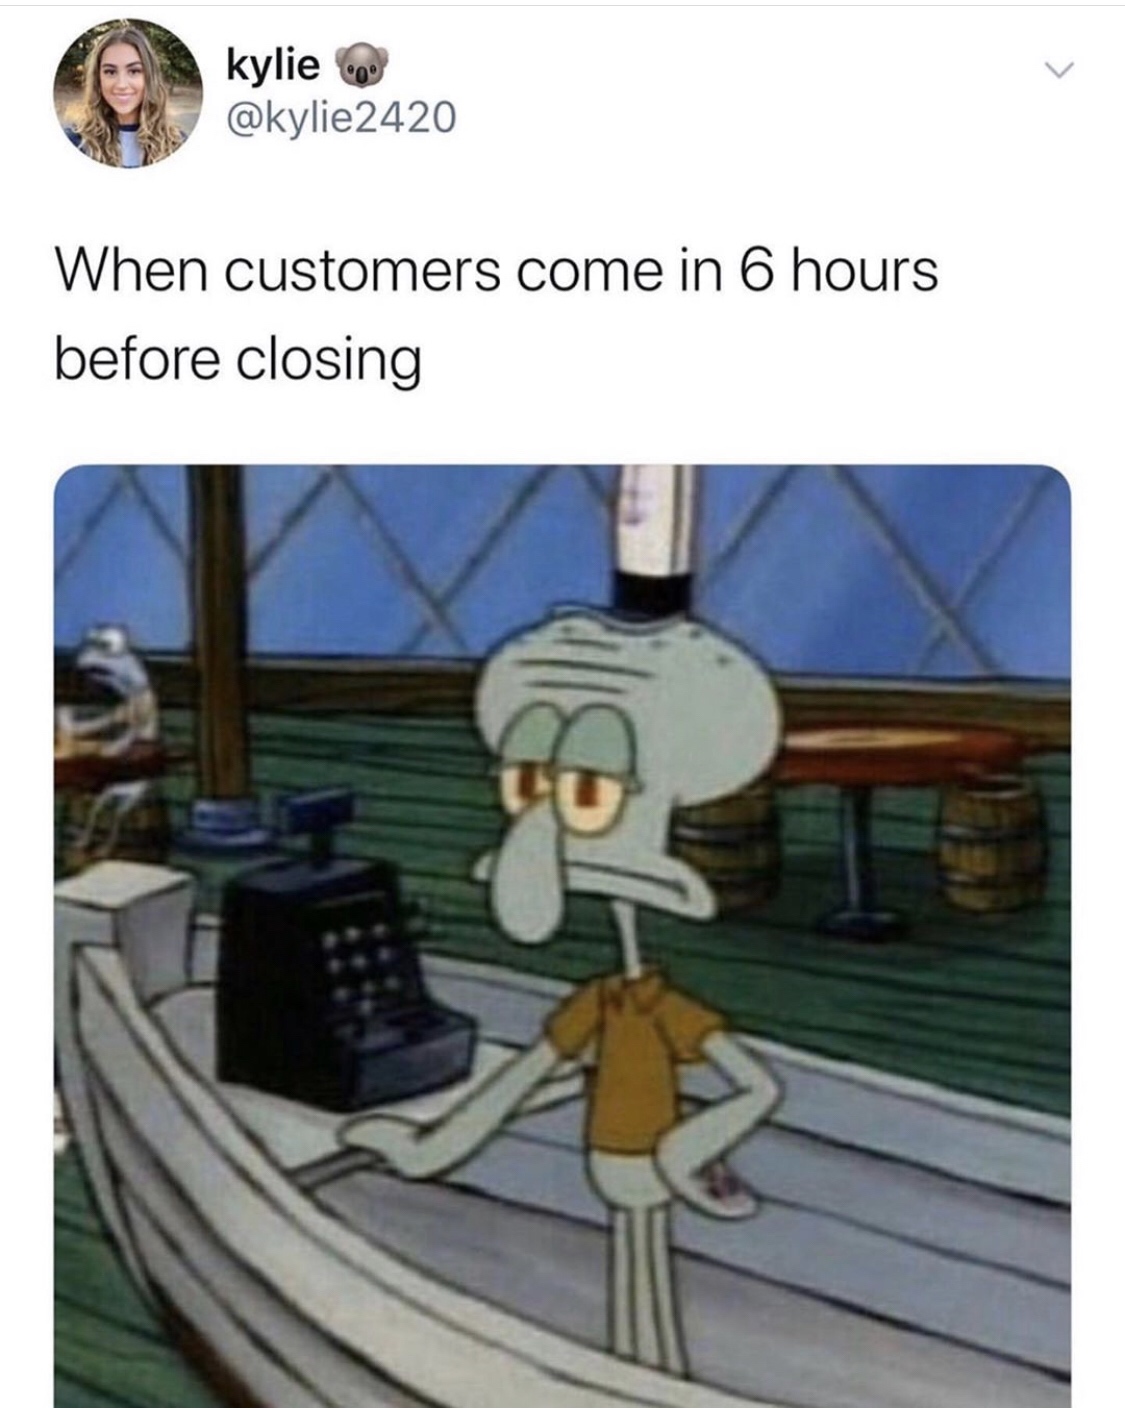 brooklyn 99 spongebob meme - kylieco When customers come in 6 hours before closing